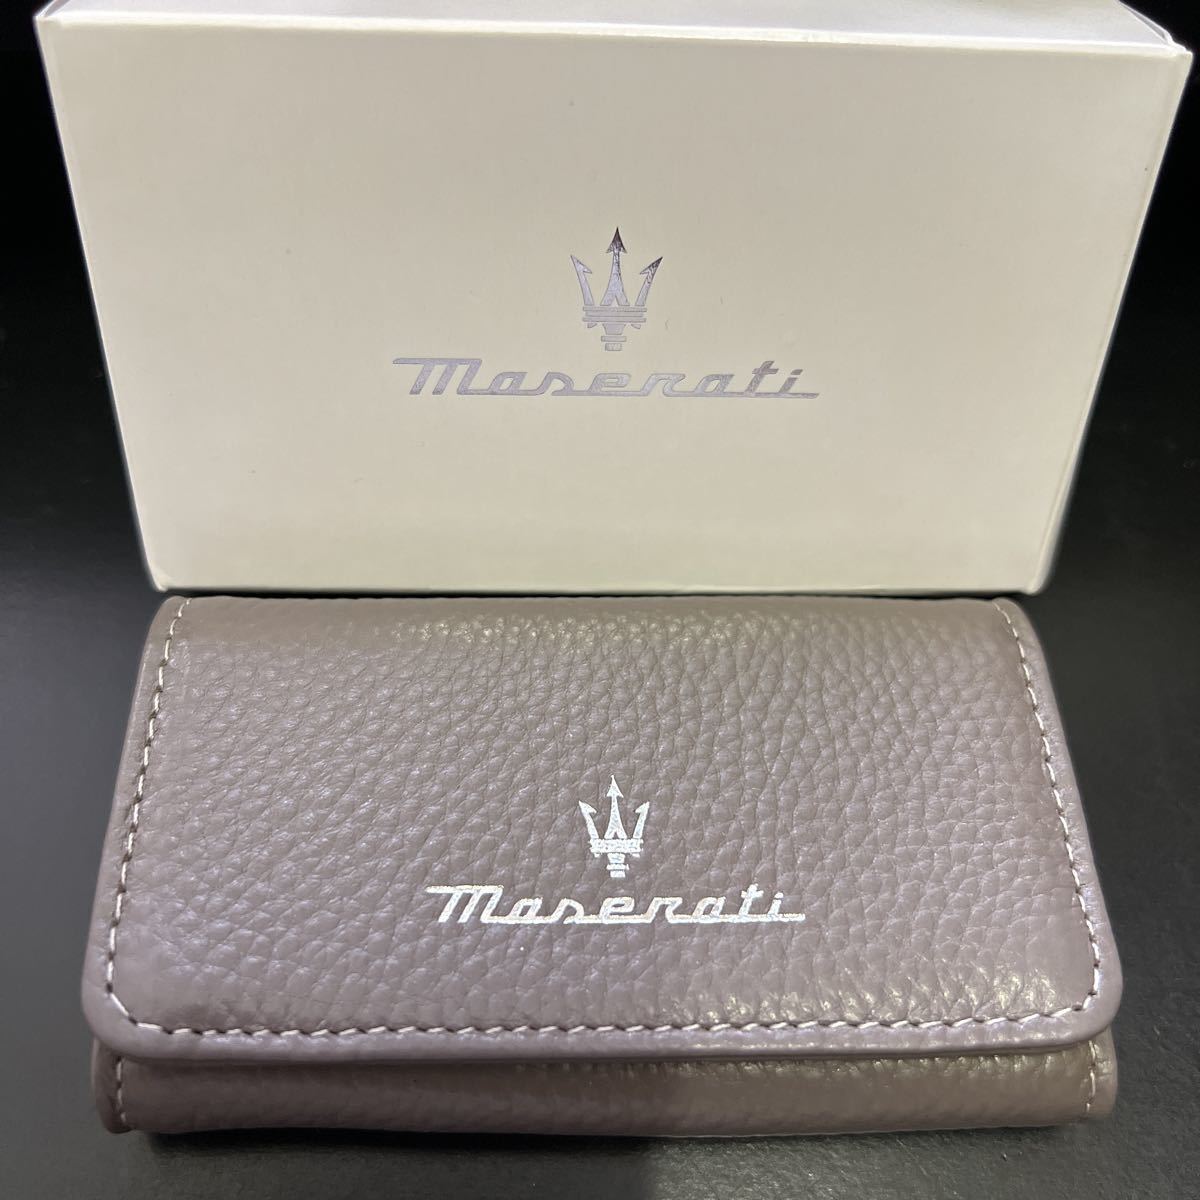  box attaching unused * Maserati MASERAT I Maserati key case original regular goods *